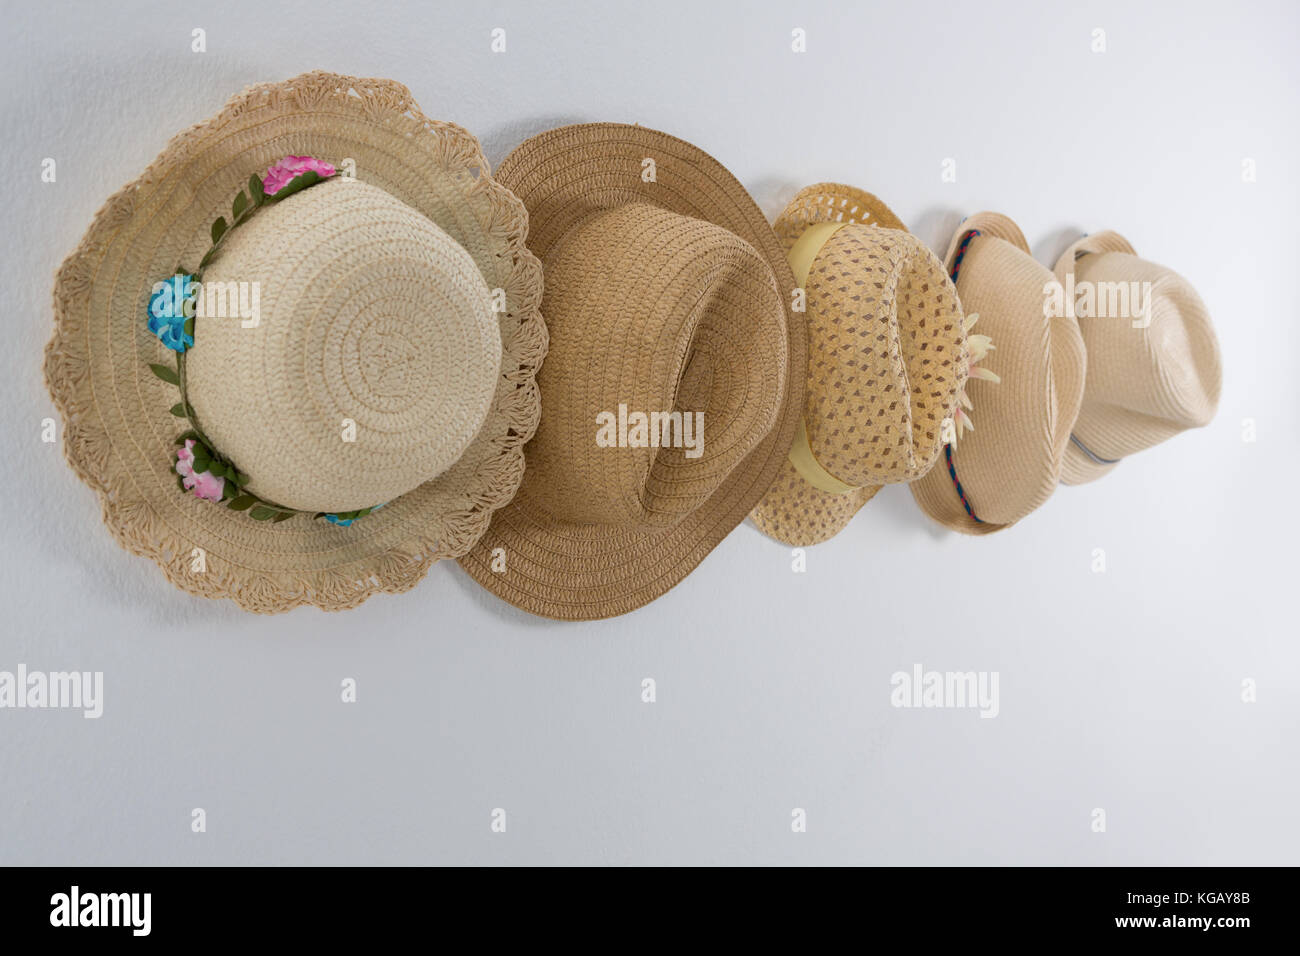 https://c8.alamy.com/comp/KGAY8B/various-straw-hats-hanging-on-hook-against-wall-KGAY8B.jpg